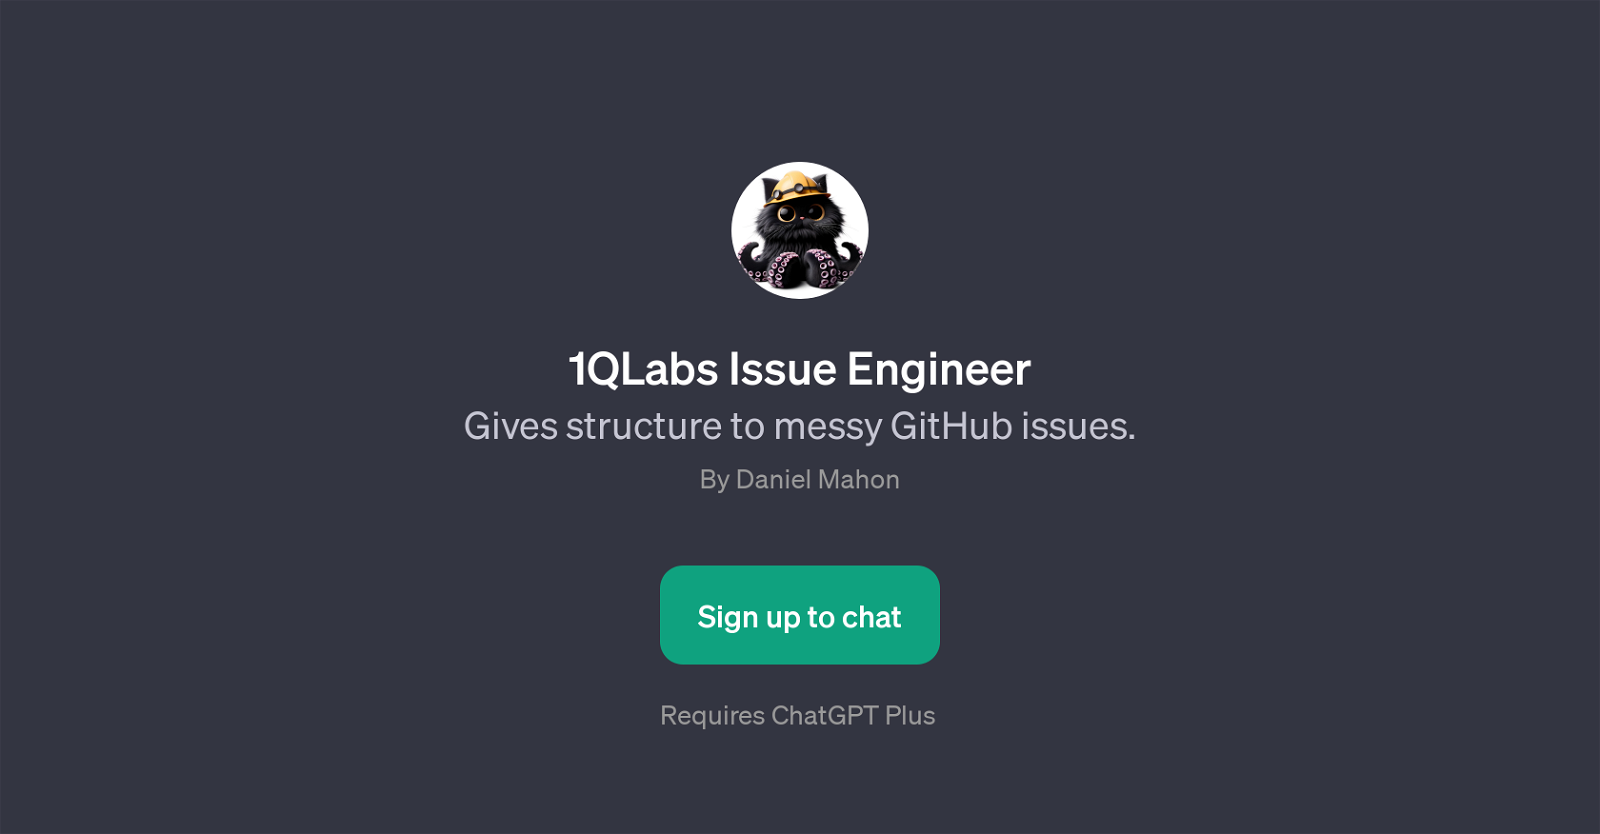 1QLabs Issue Engineer website